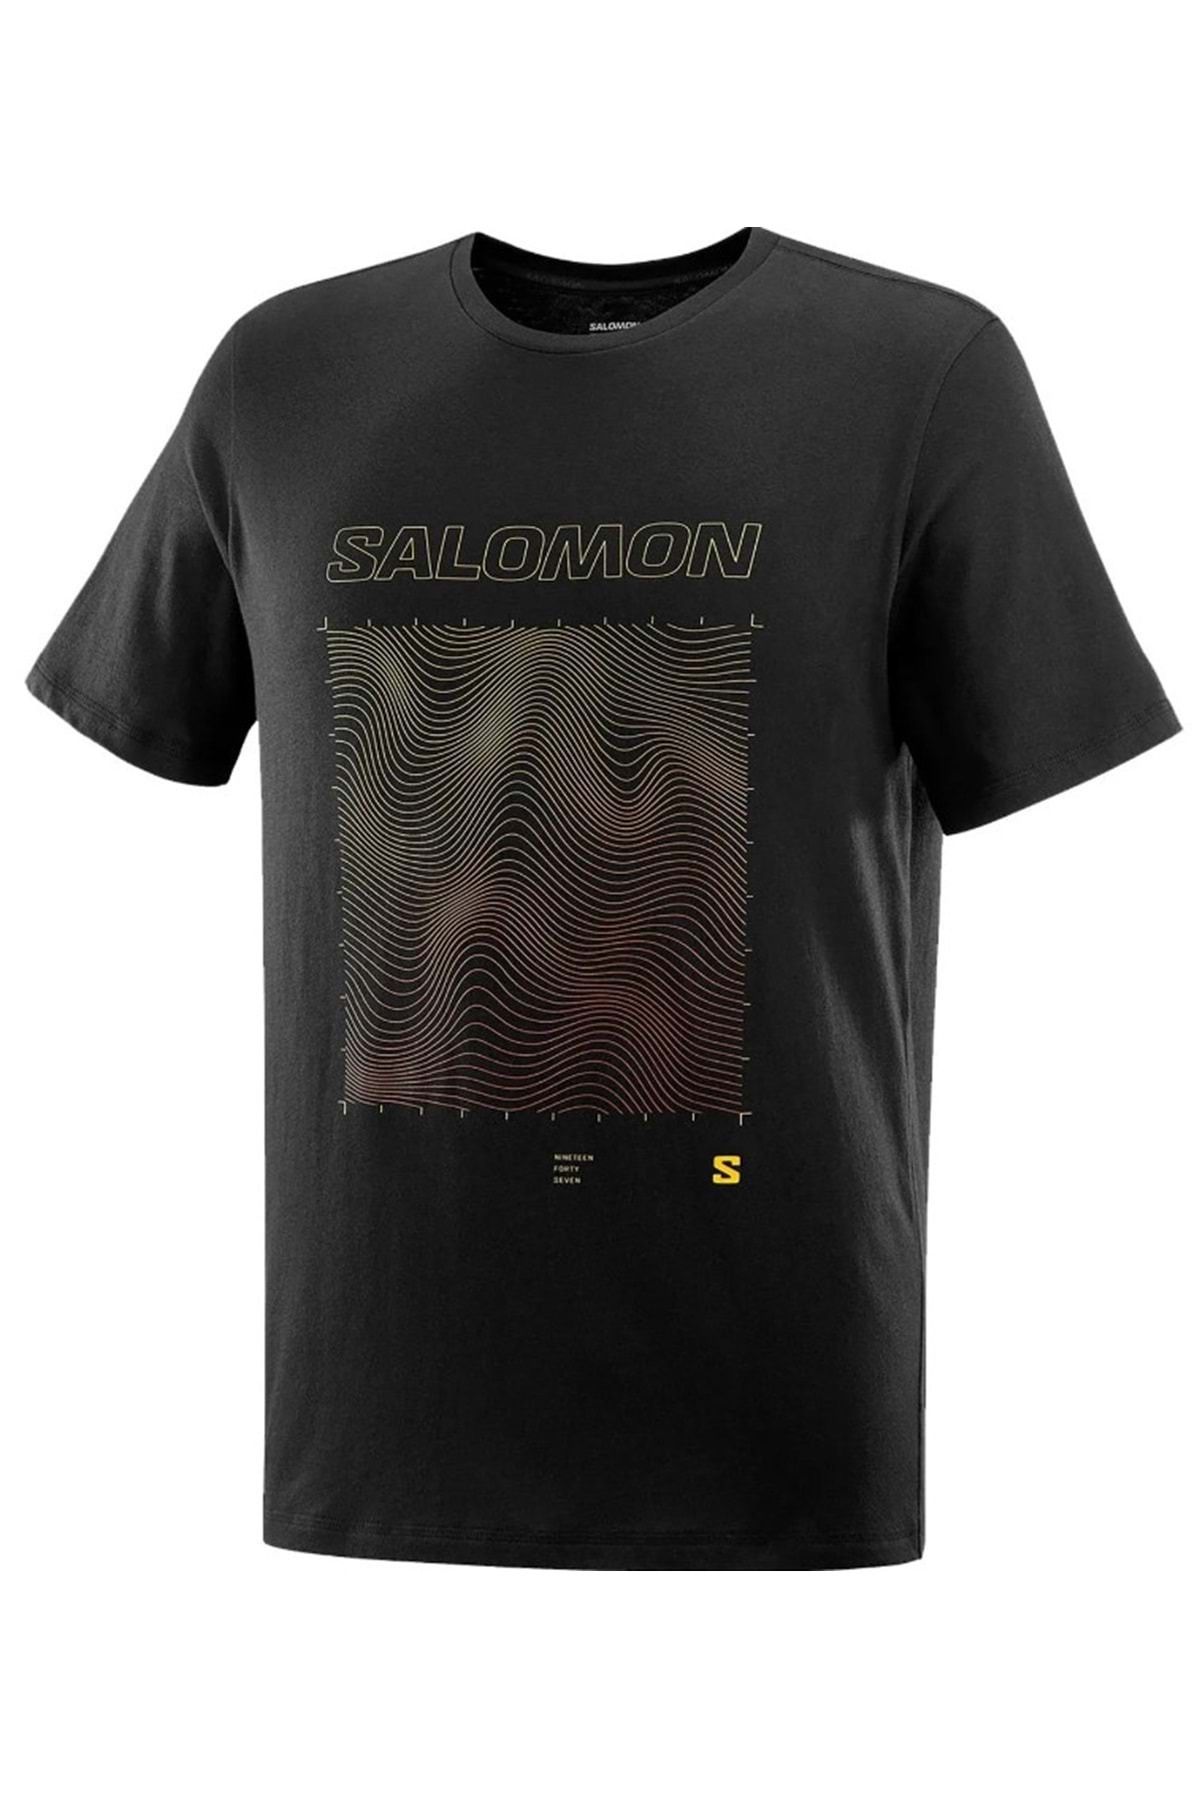 Salomon Lc2219200 Graphic Ss Tee Tişört Erkek T-shirt Siyah